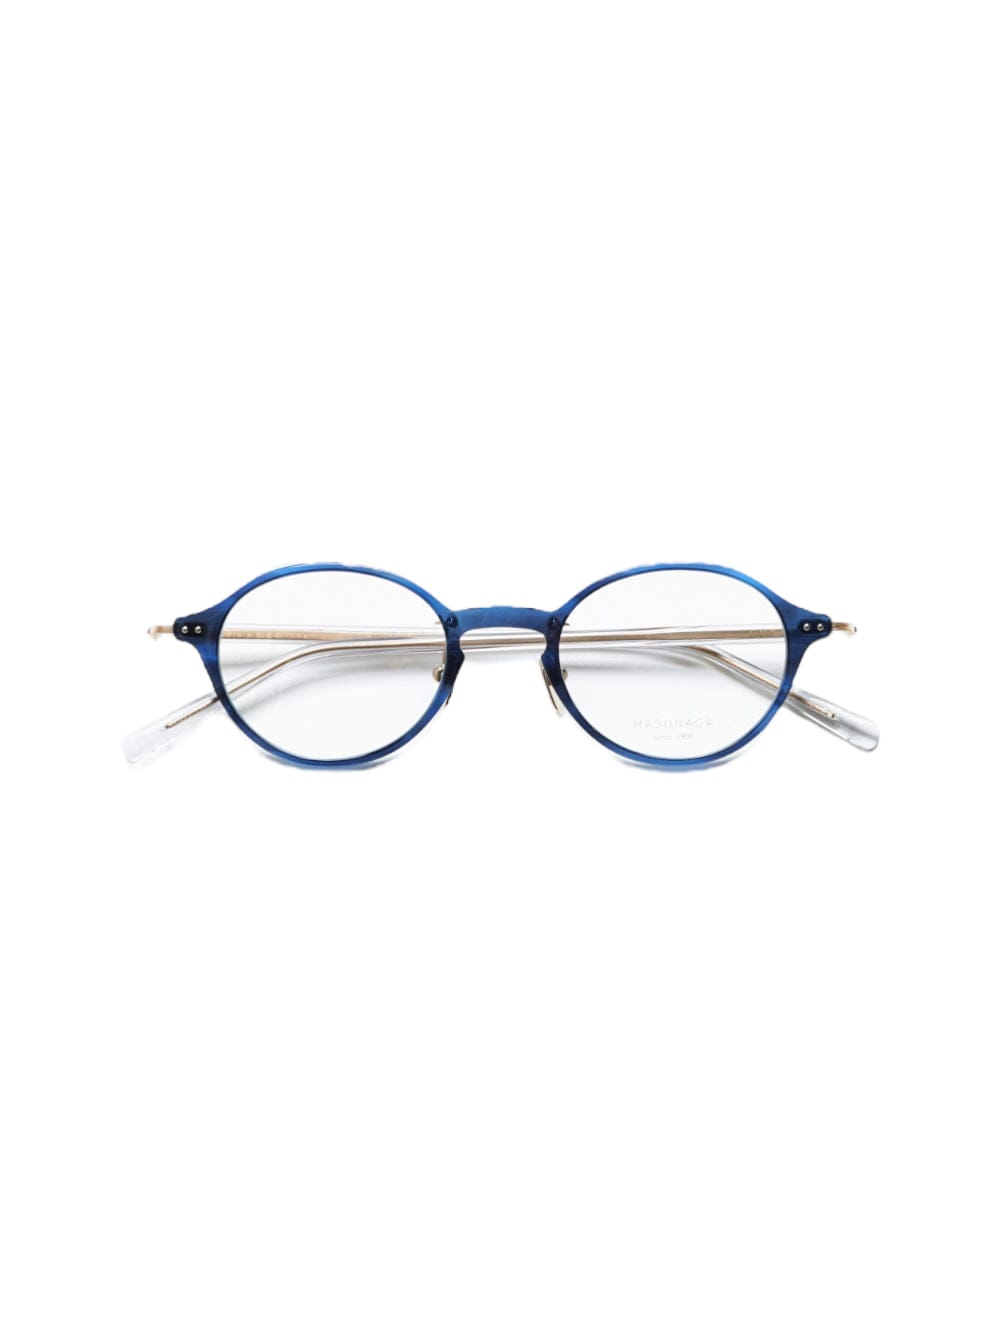 Shop Masunaga Gms 830 - Blue Navy Glasses